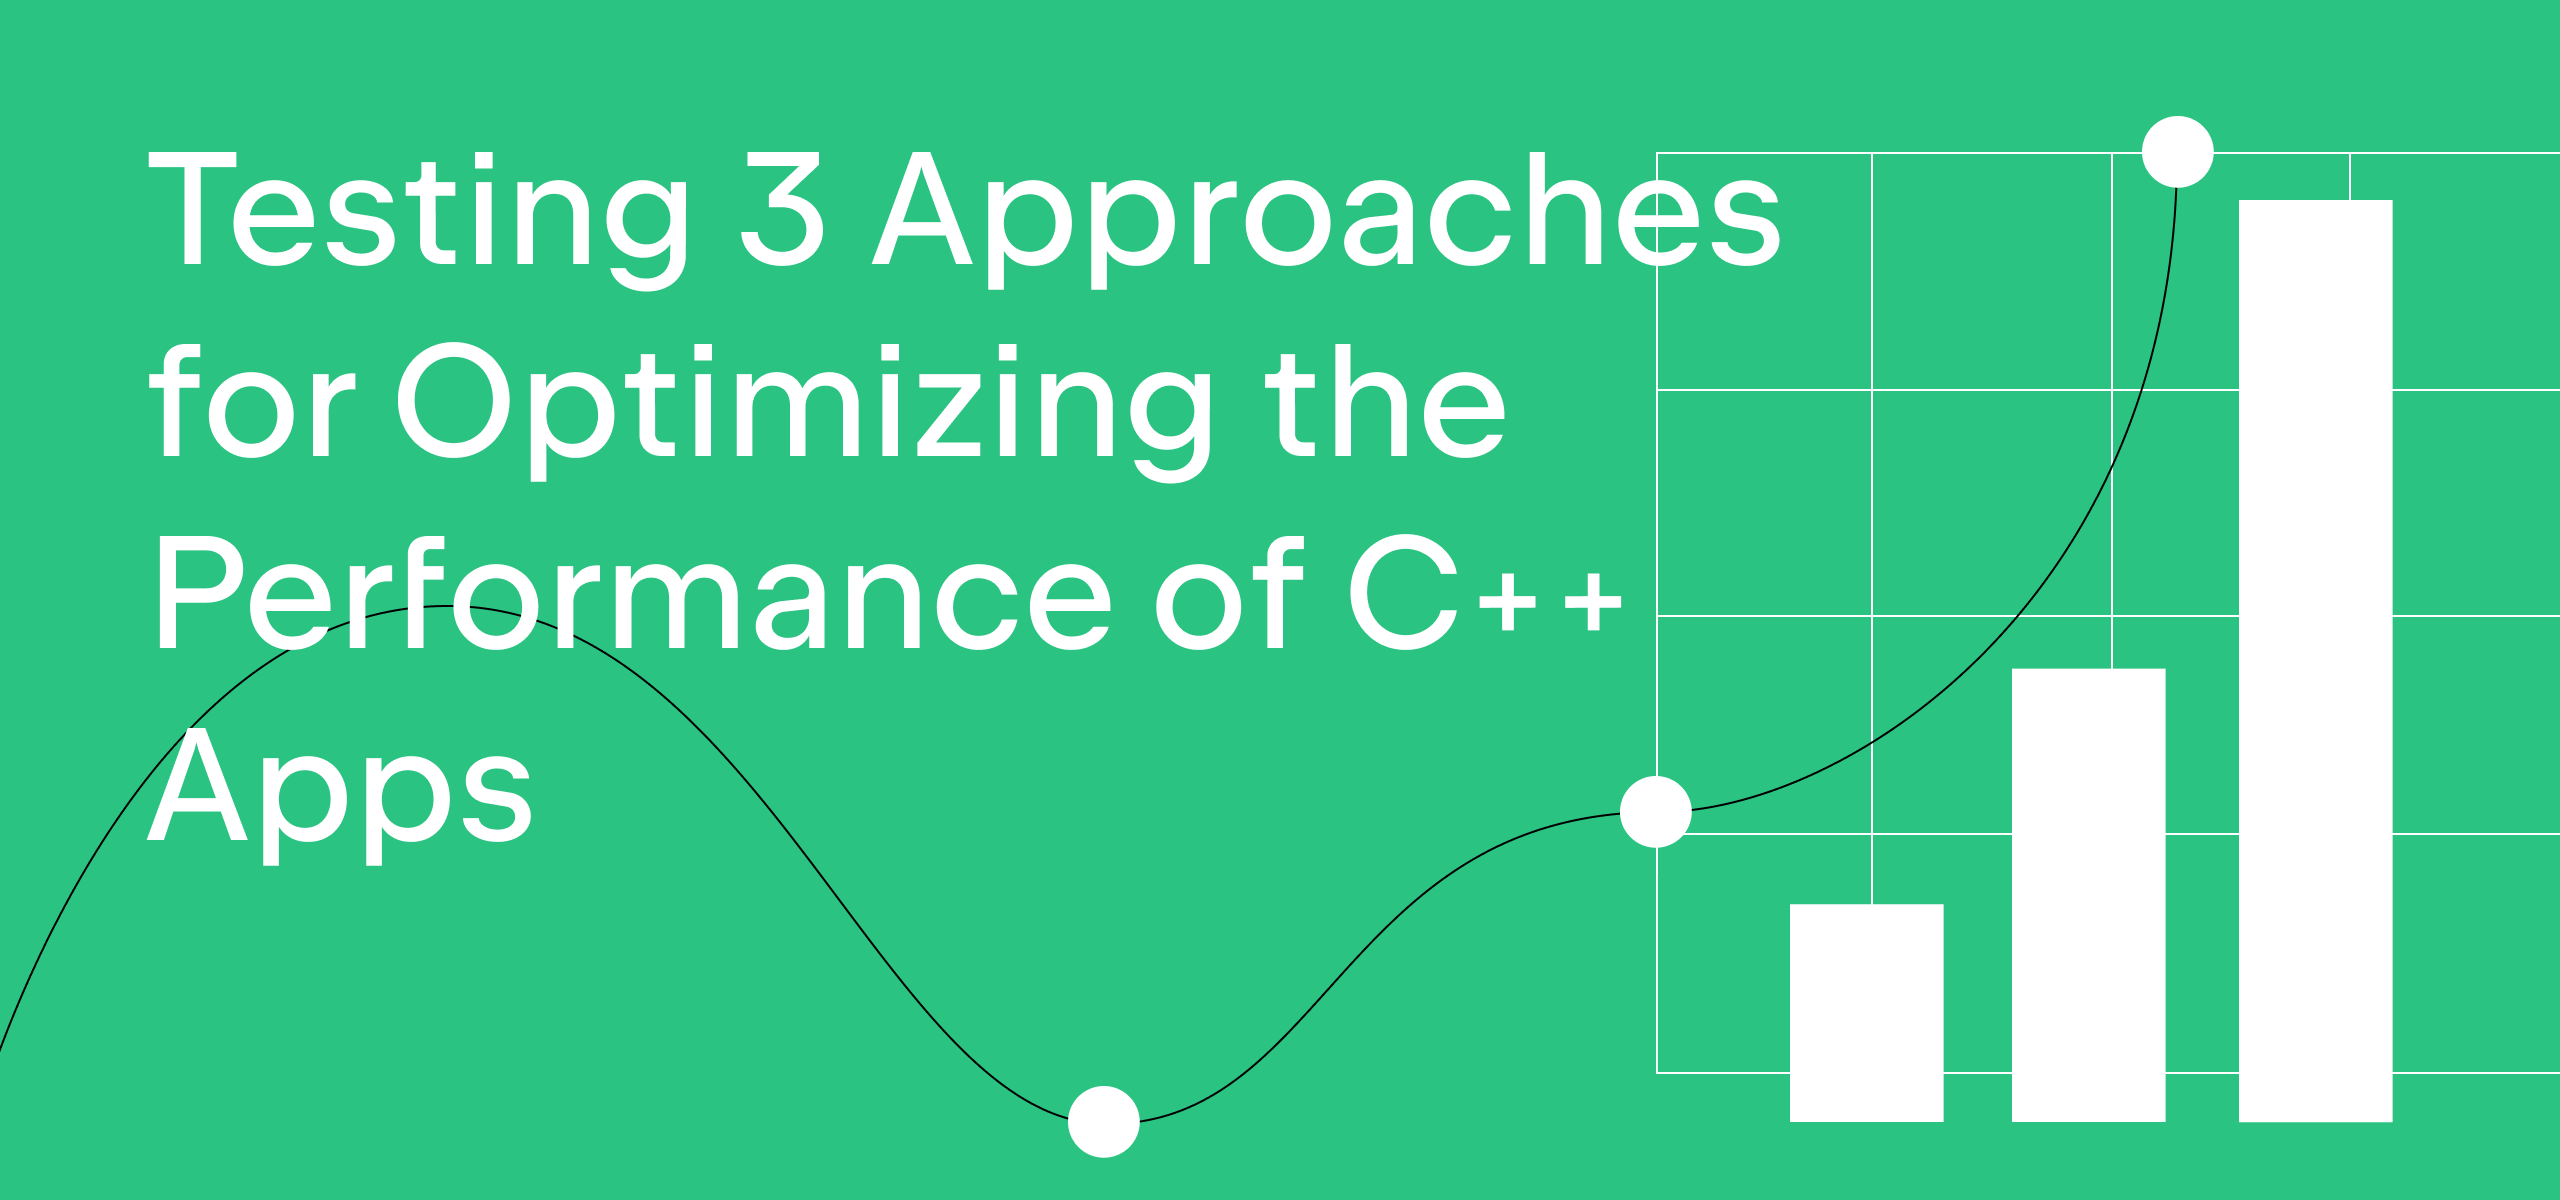 C++ Apps Performance